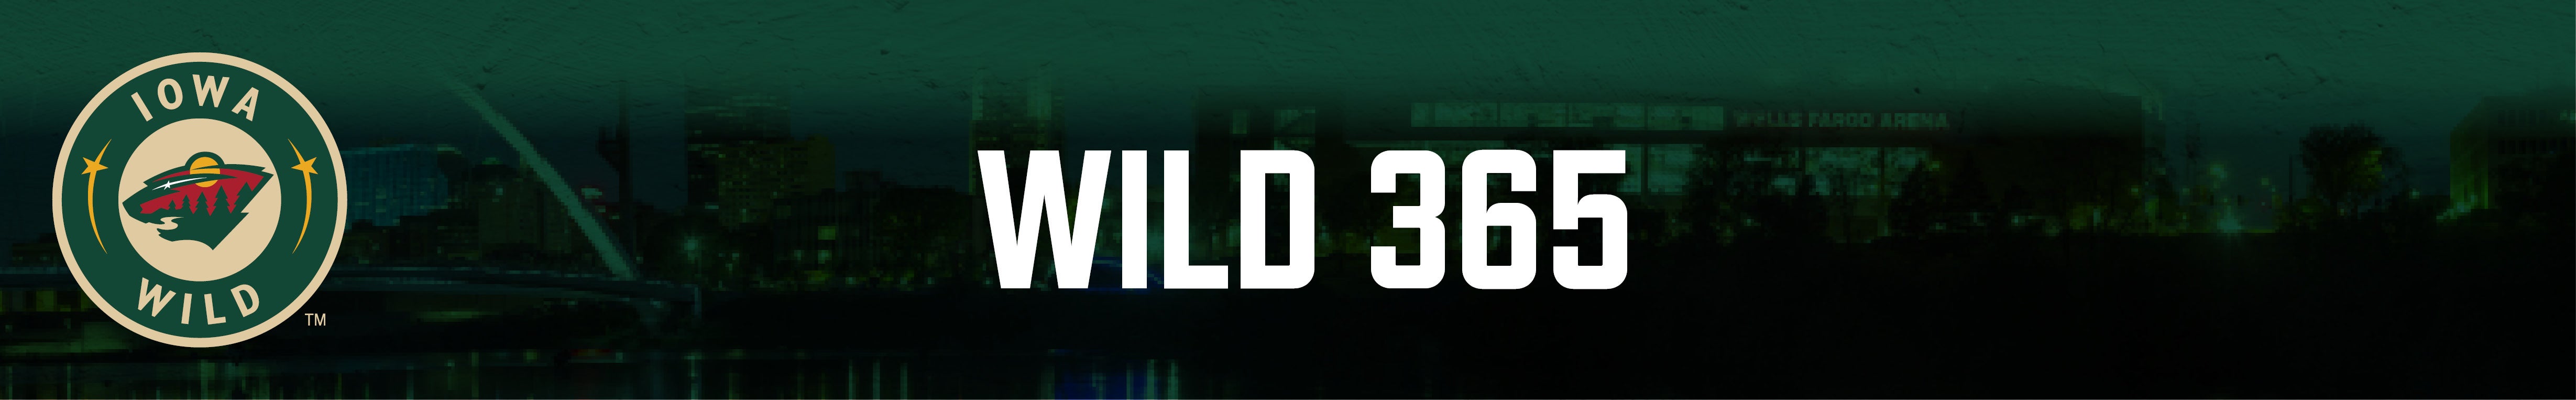 IAWild_Web-Templates_23-24_Wild365Header-fd564fcae6.jpg